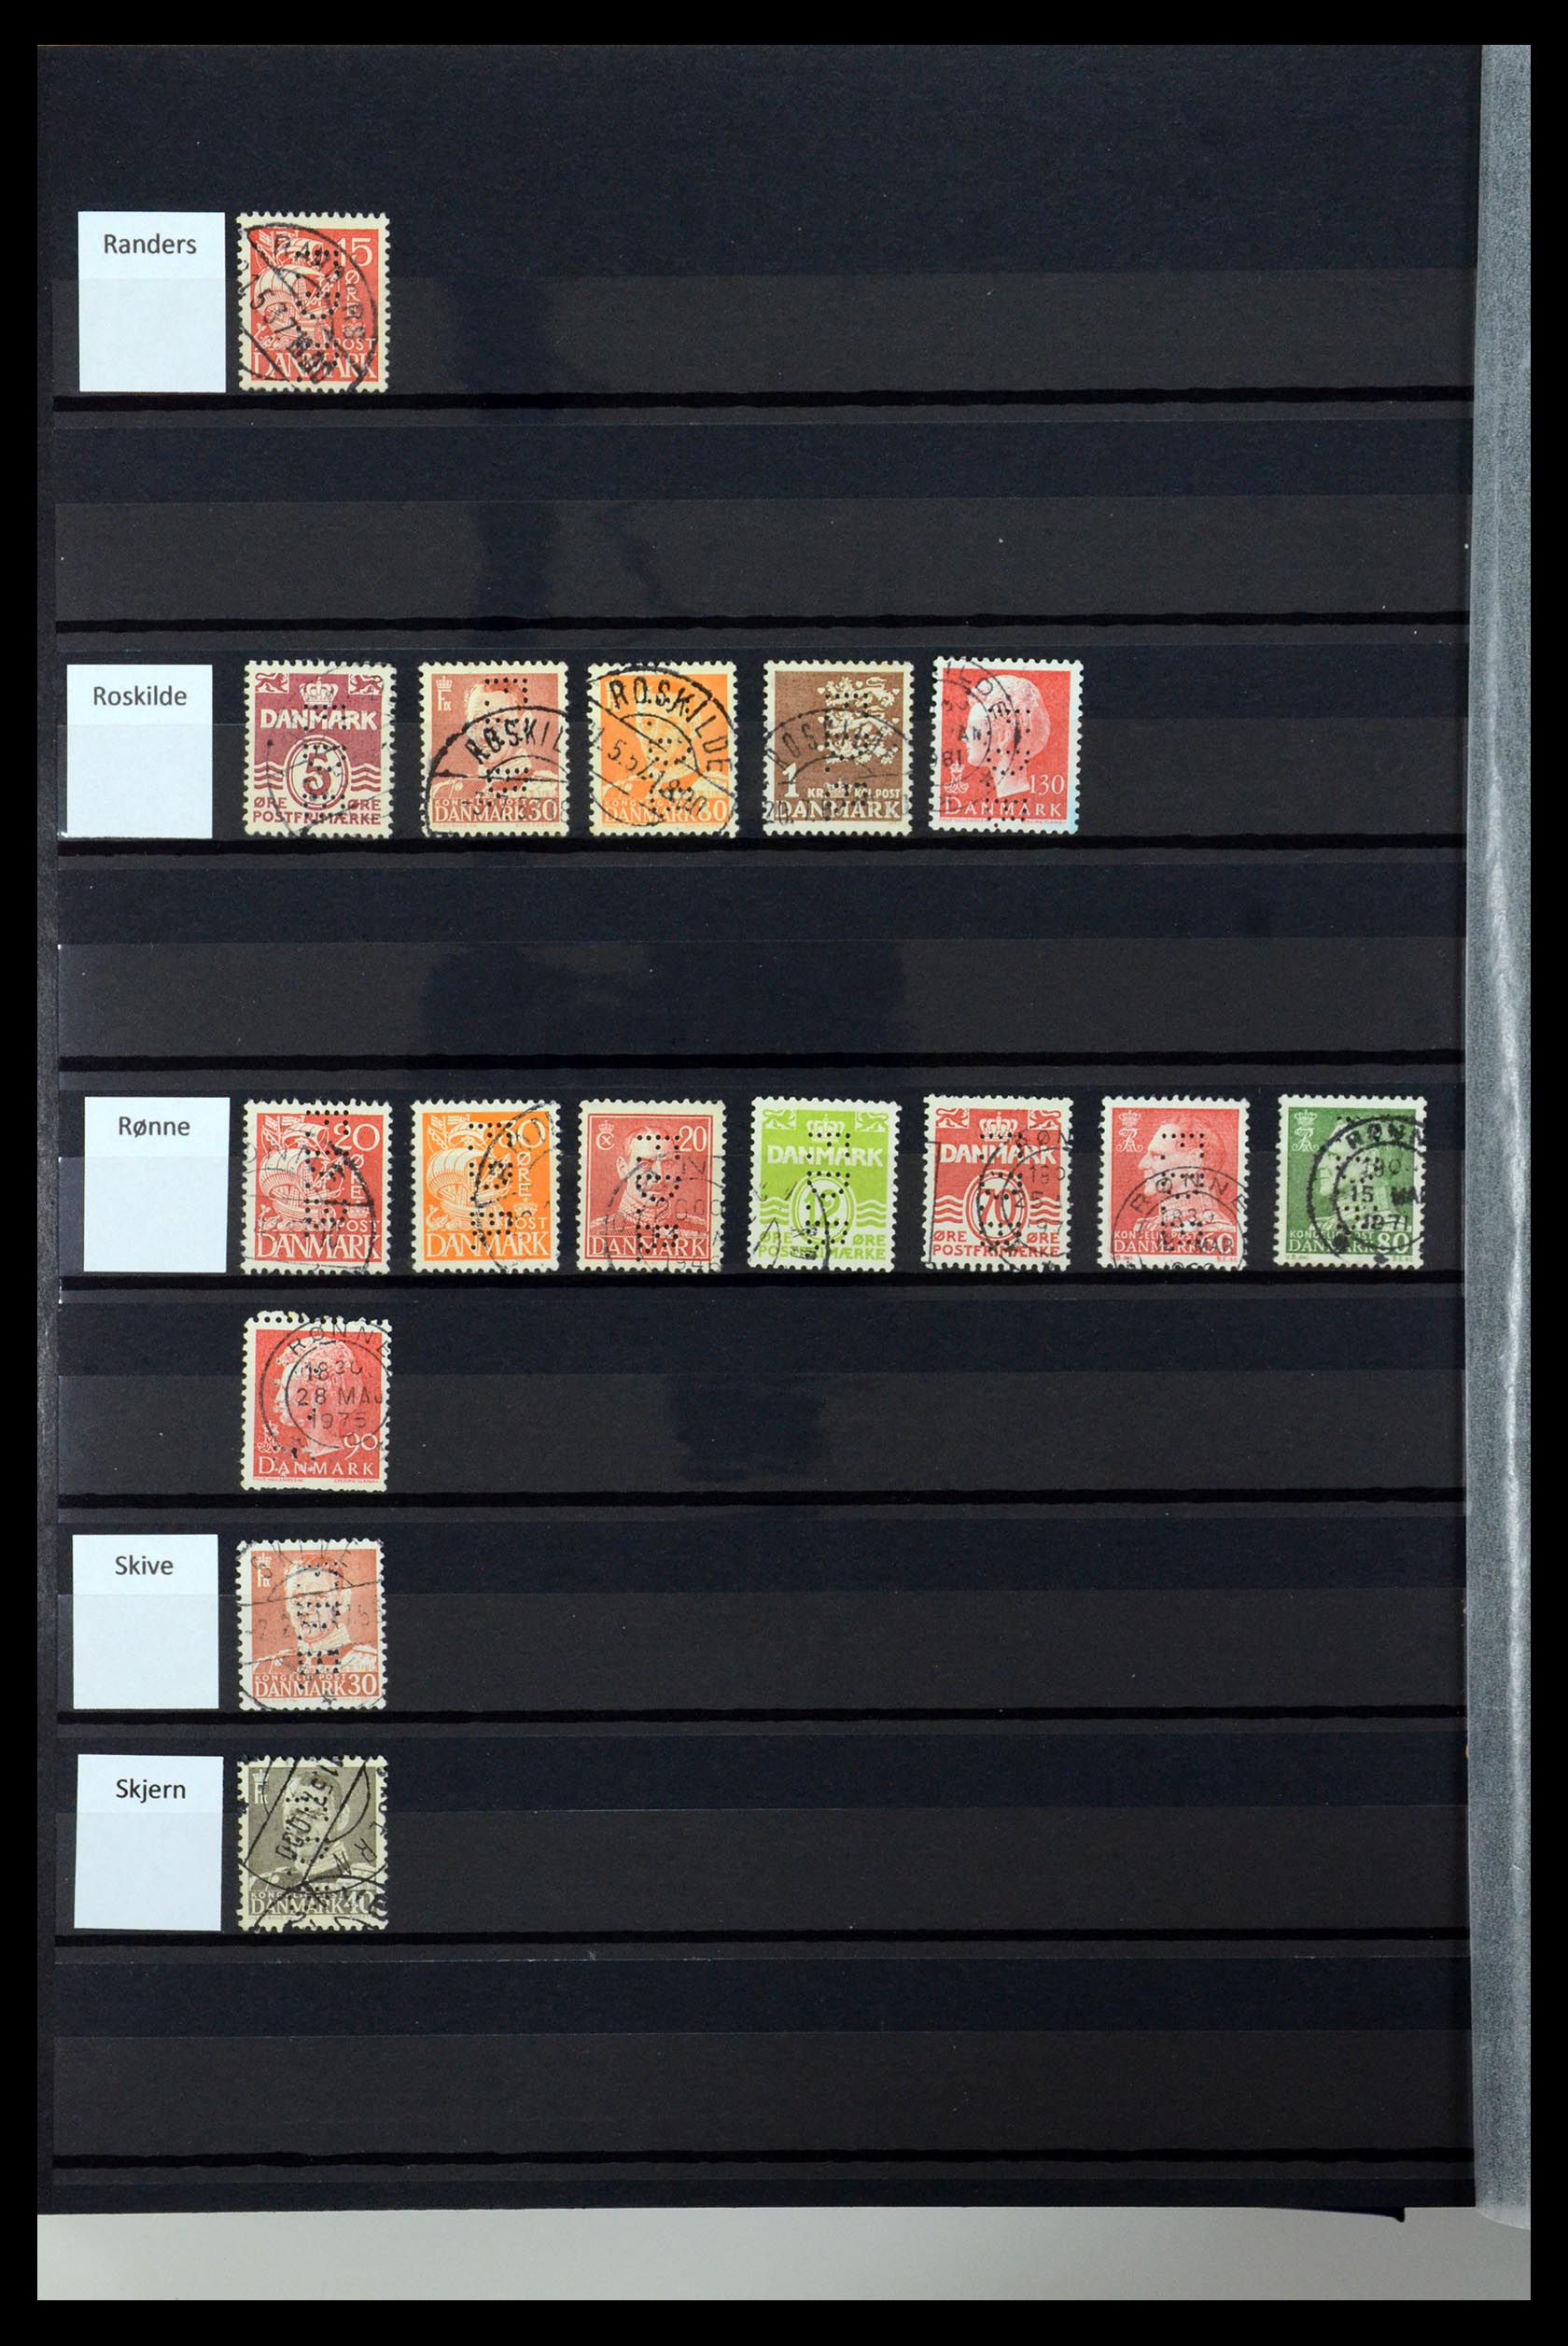 36396 072 - Stamp collection 36396 Denmark perfins.